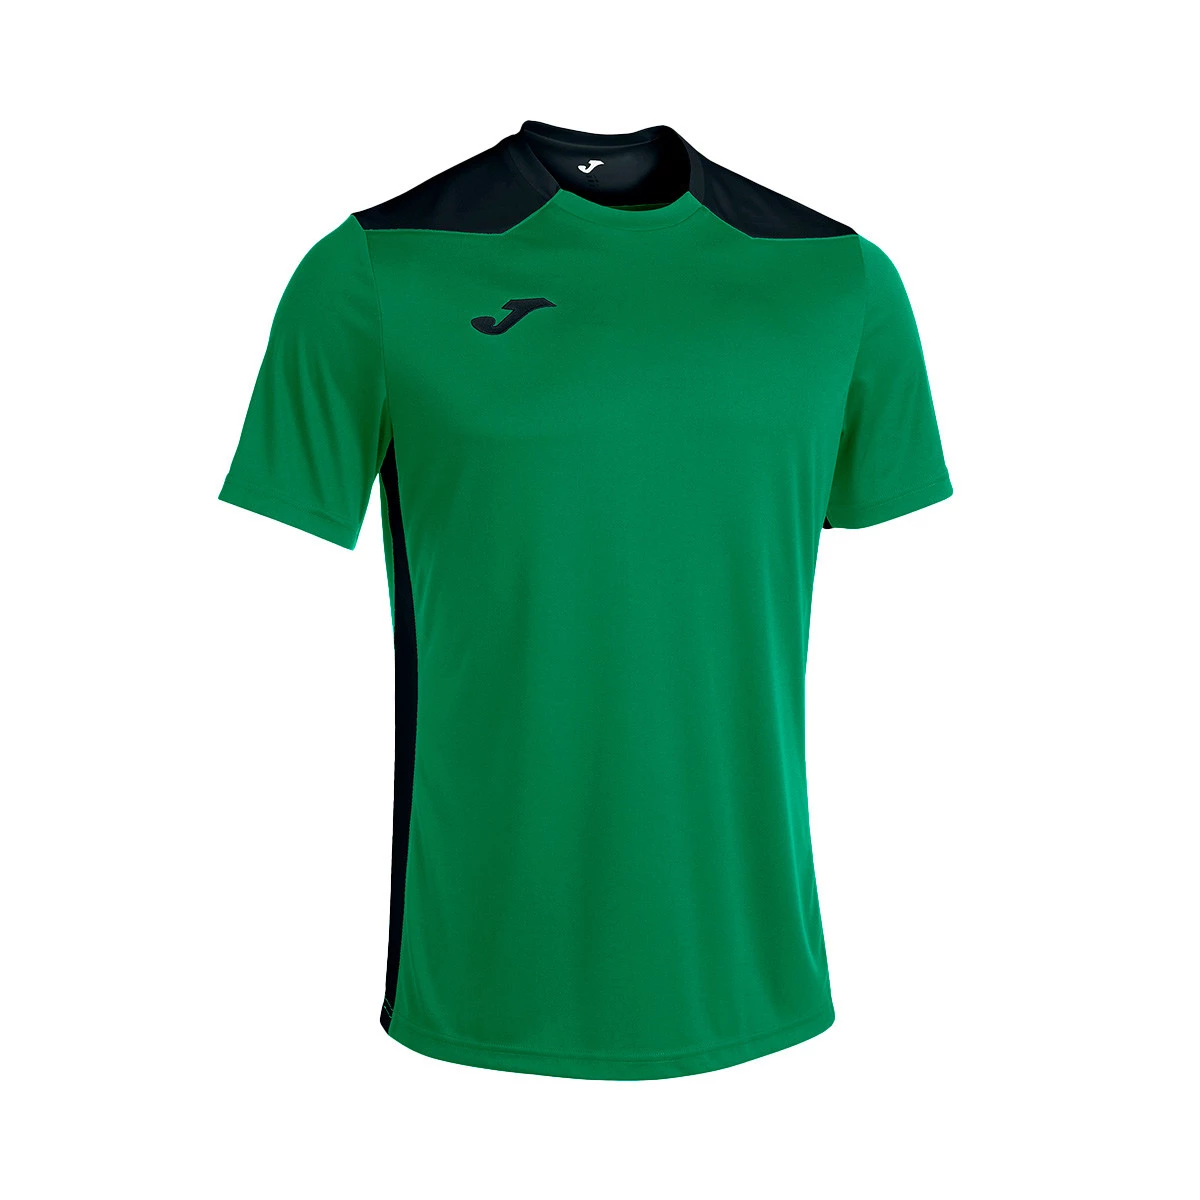 Camiseta Joma Championship VI m/c Niño Verde-Negro - Fútbol Emotion